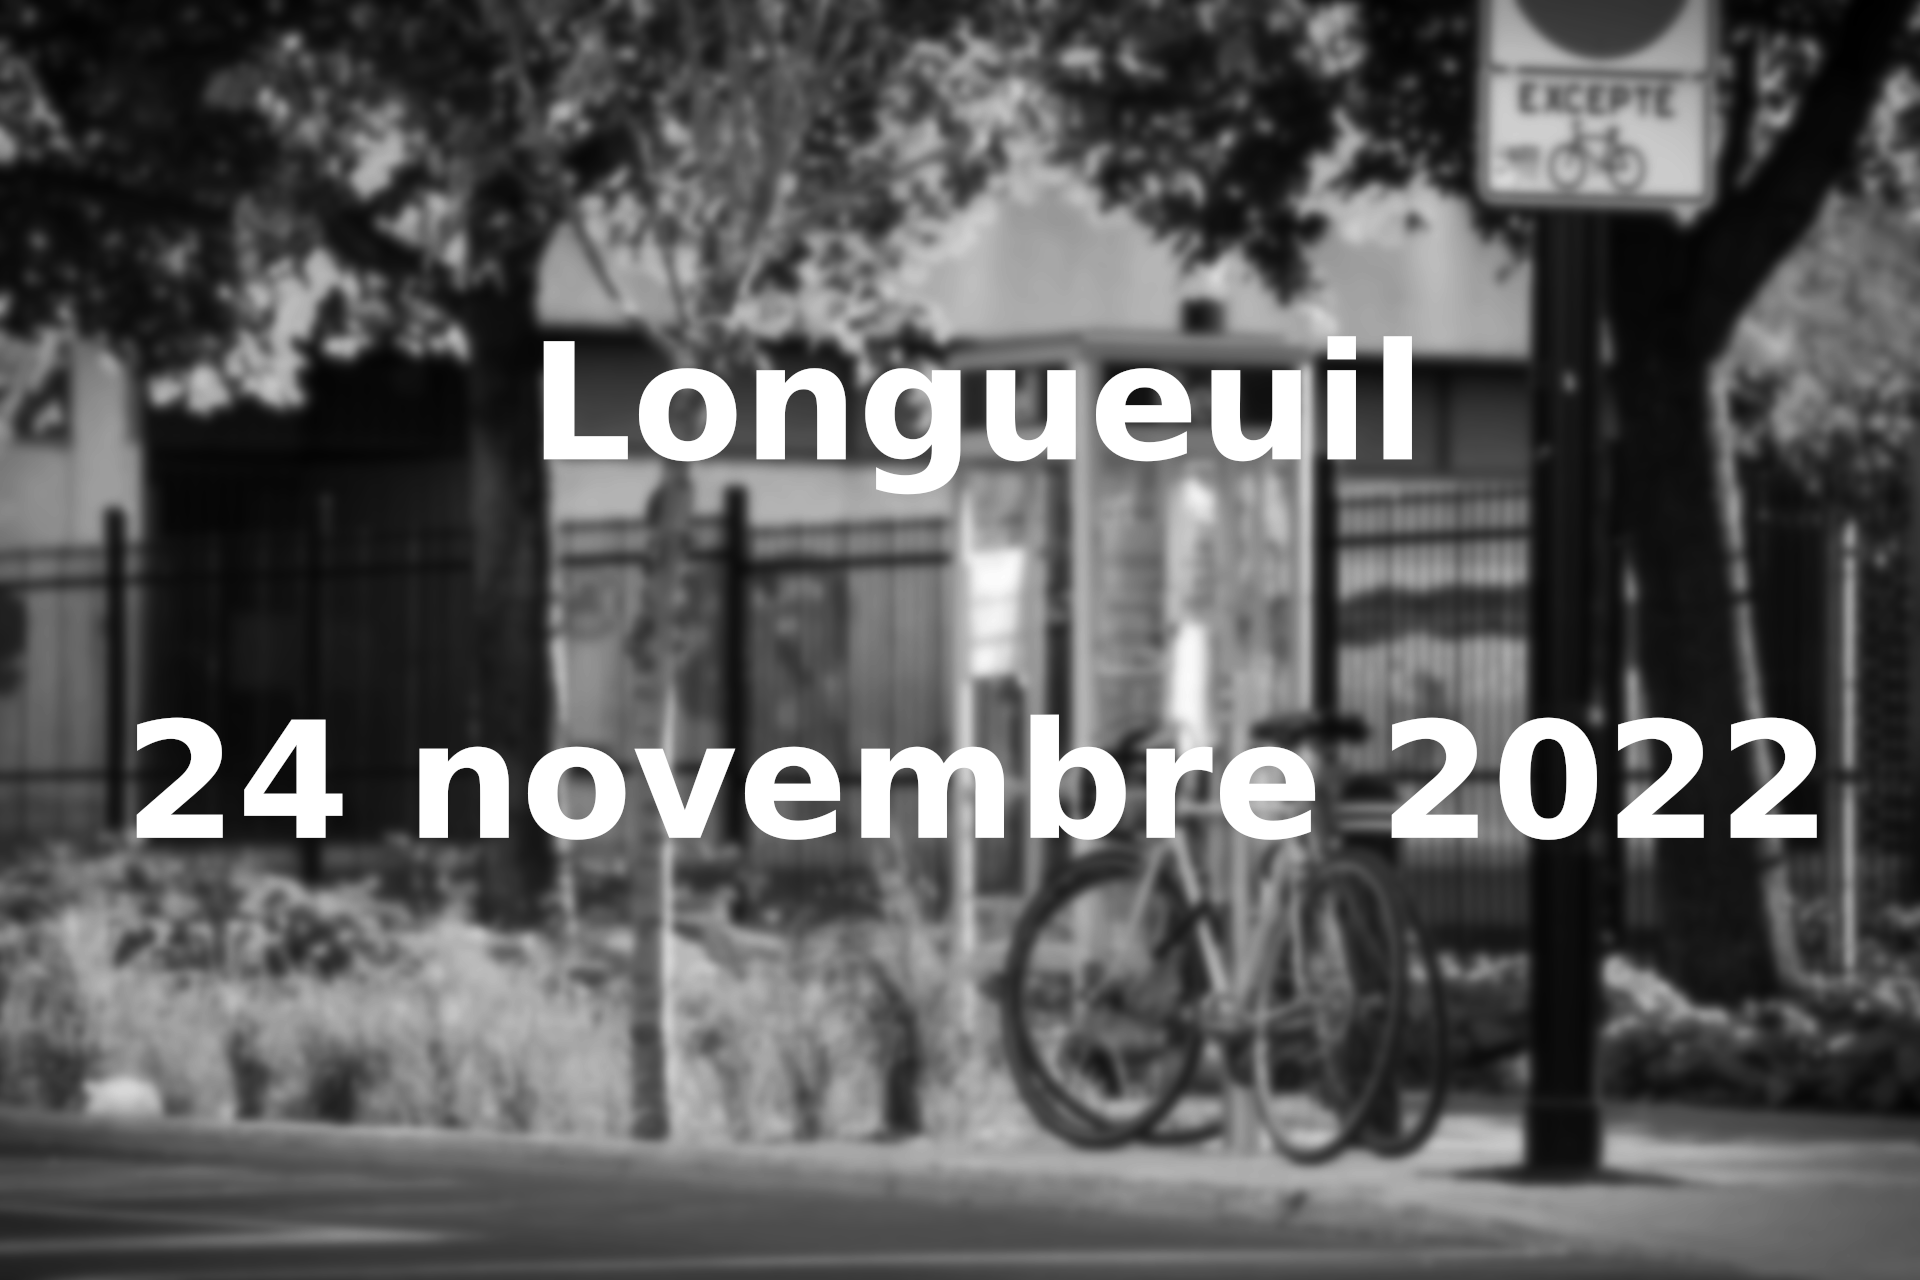 Longueuil